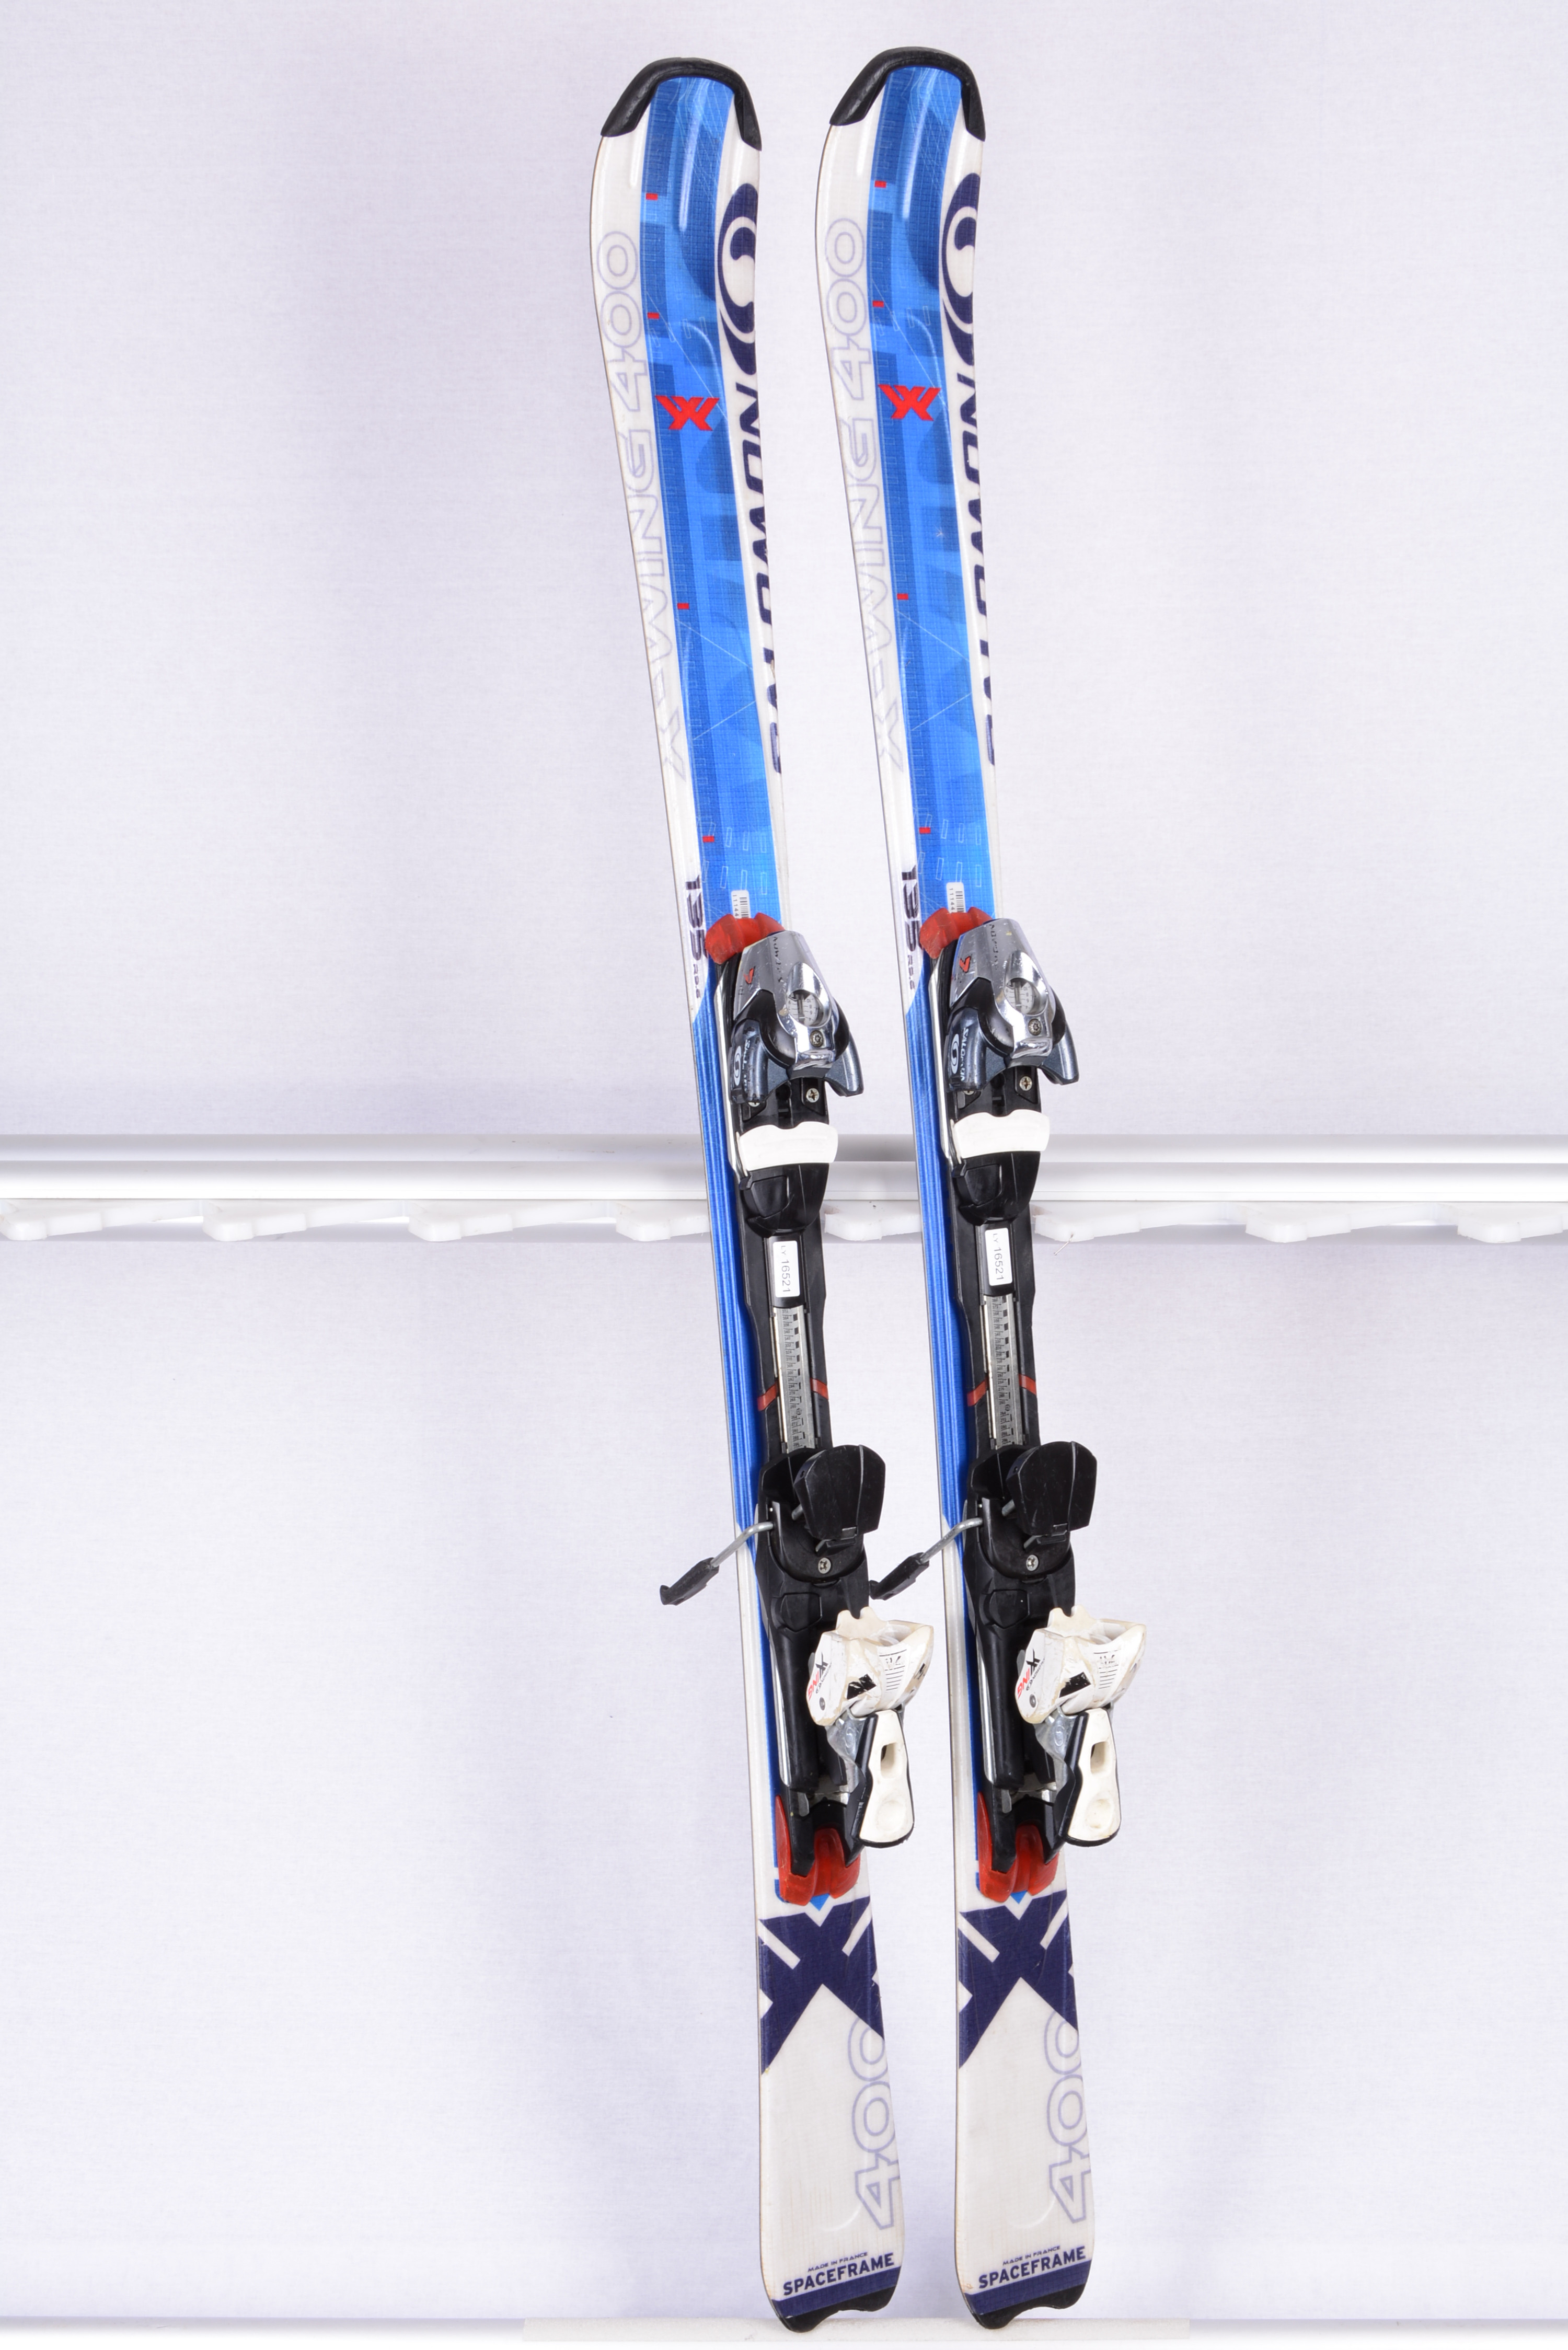 scheiden Lodge Zeggen skis SALOMON X-WING 400, blue/white, spaceframe + Salomon 711 -  Mardosport.com